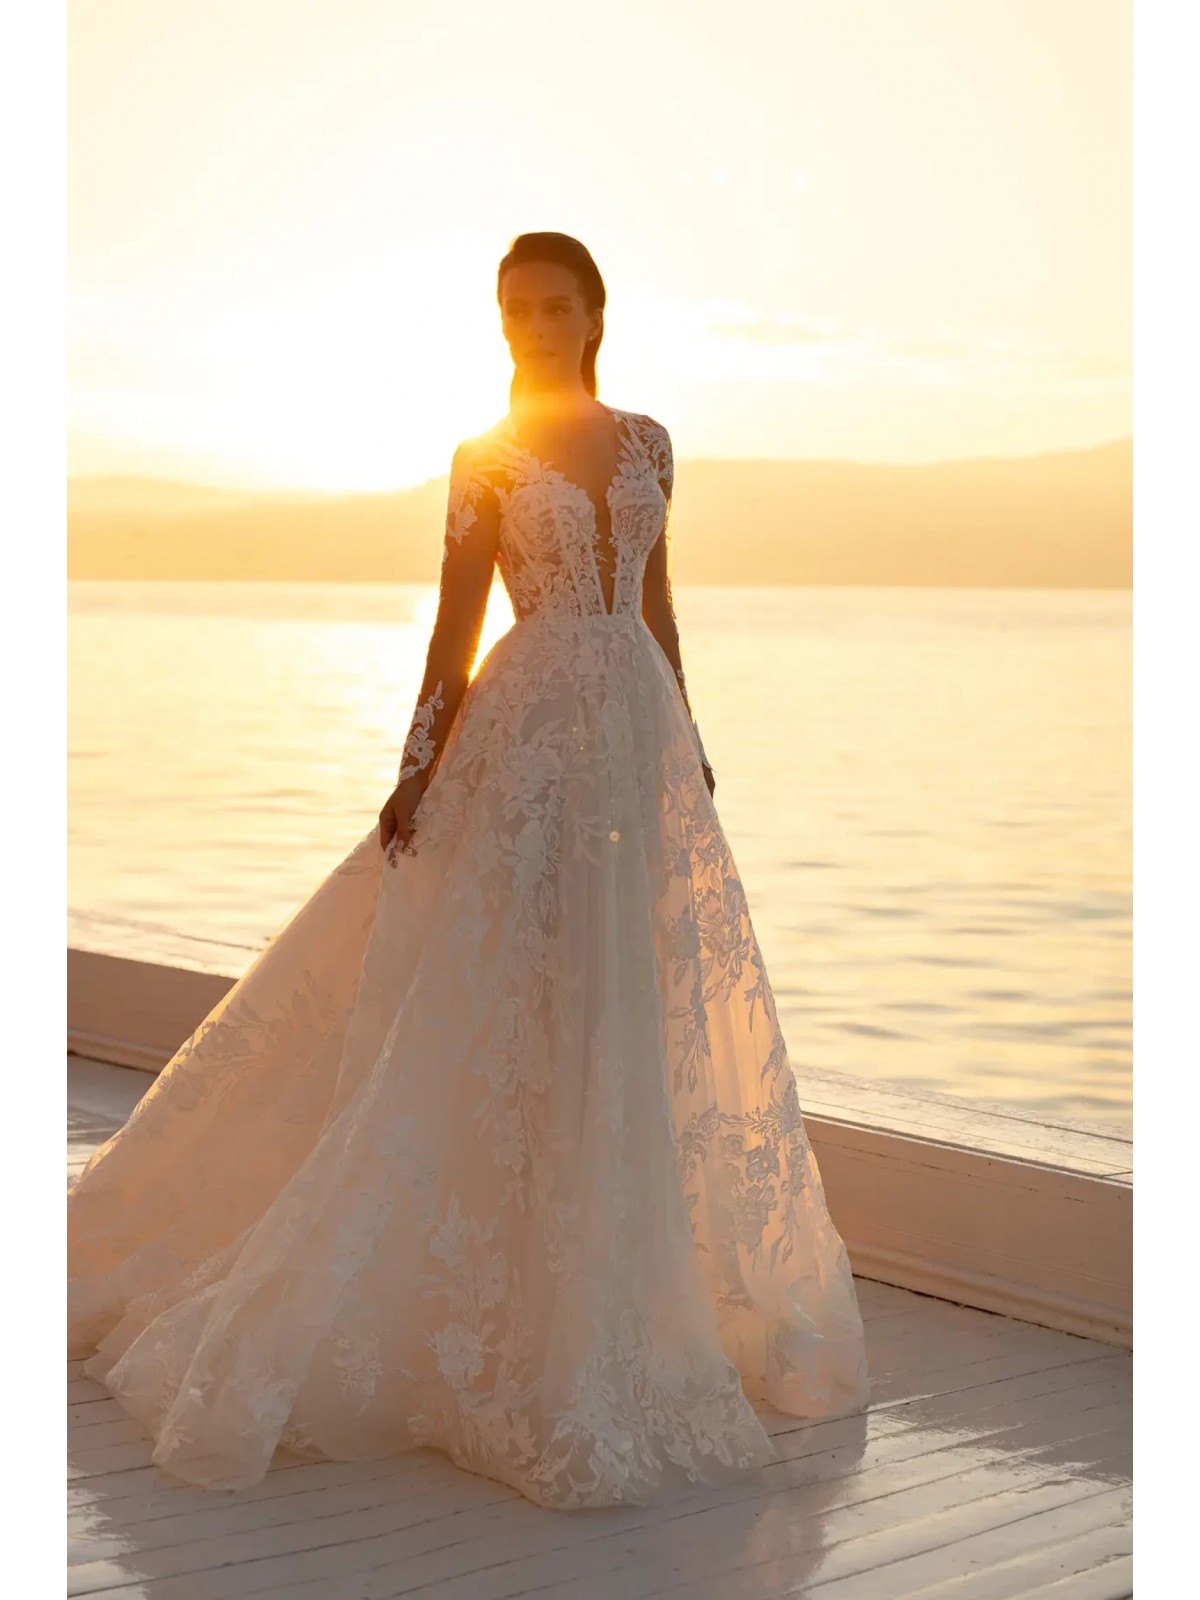 Wedding Dress - Naia - LDK-08213.00.00